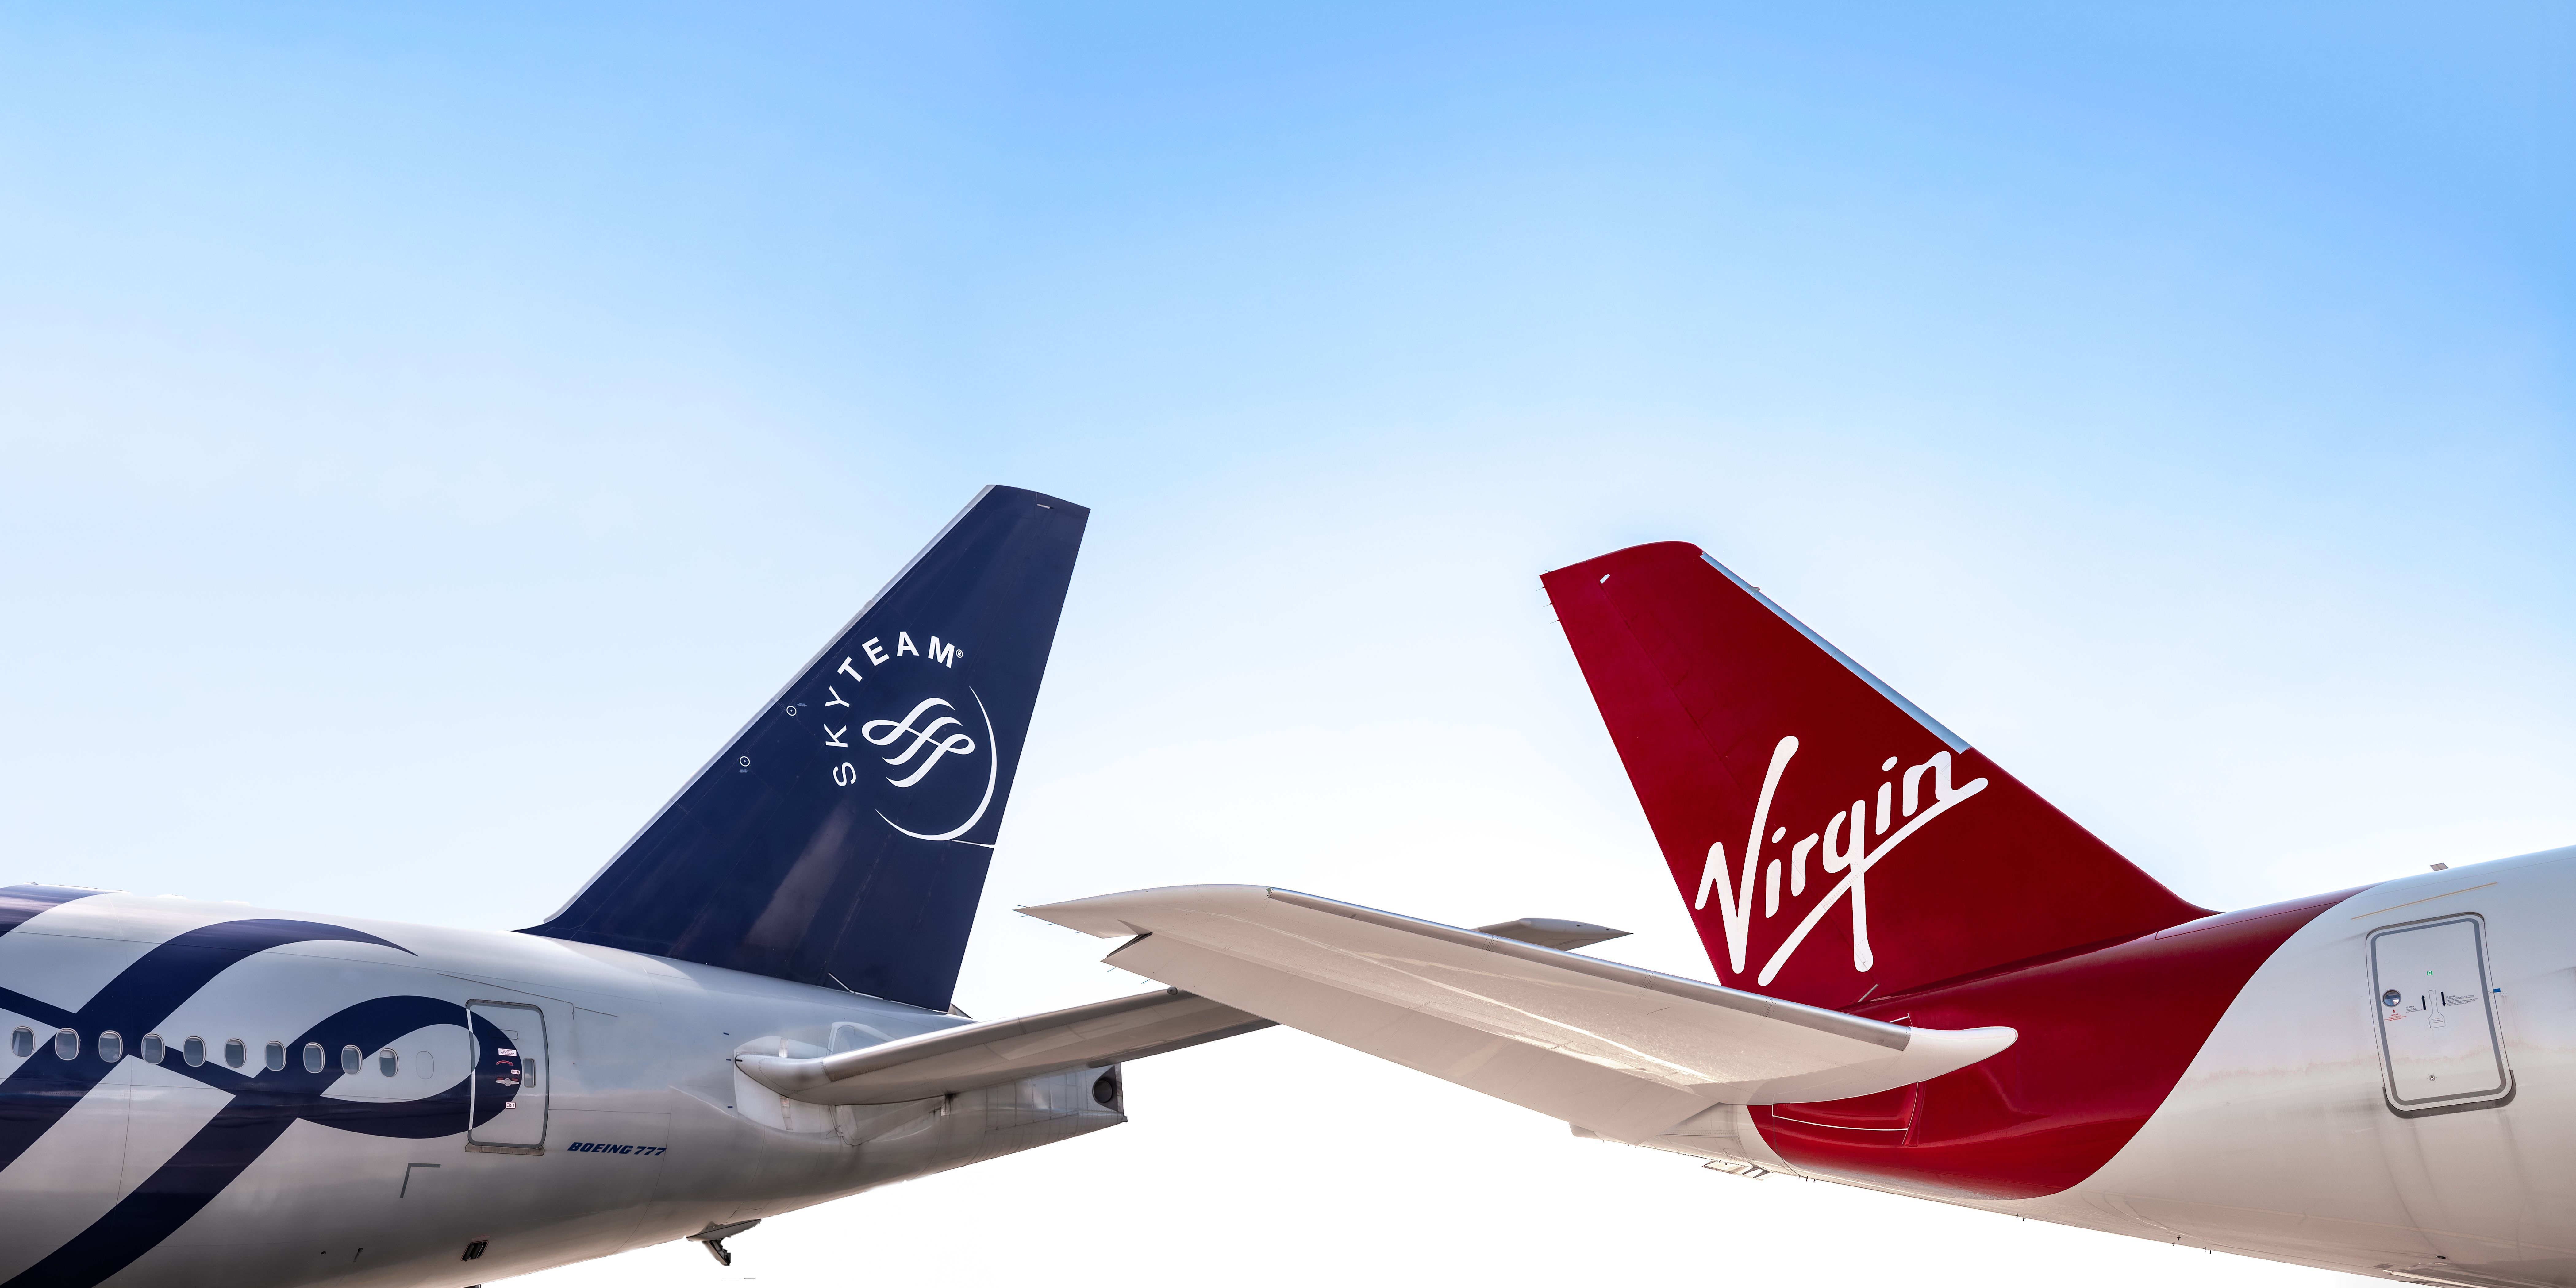 SkyTeam and Virgin Atlantic tailfin 